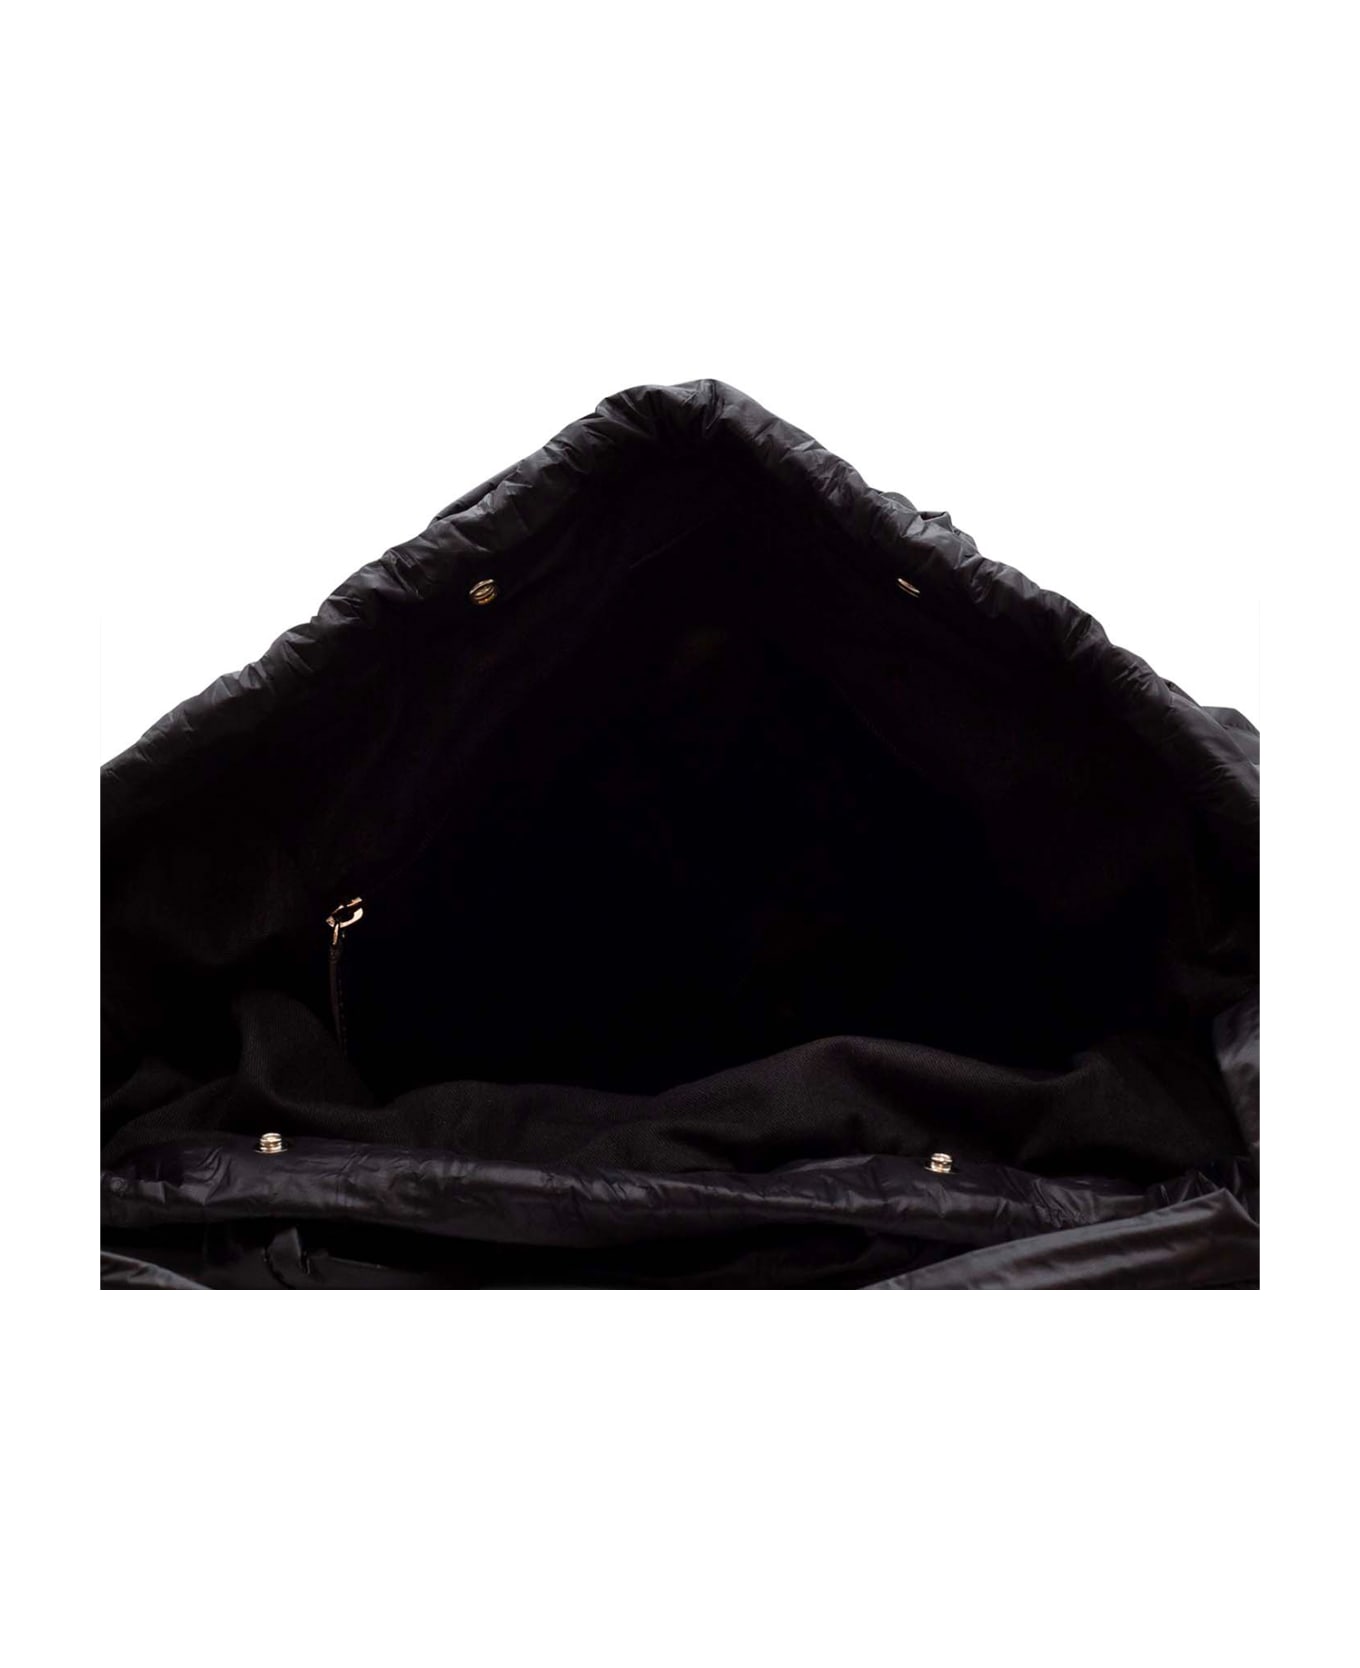 Vic Matié Large Black Nylon Handbag - BLACK トートバッグ